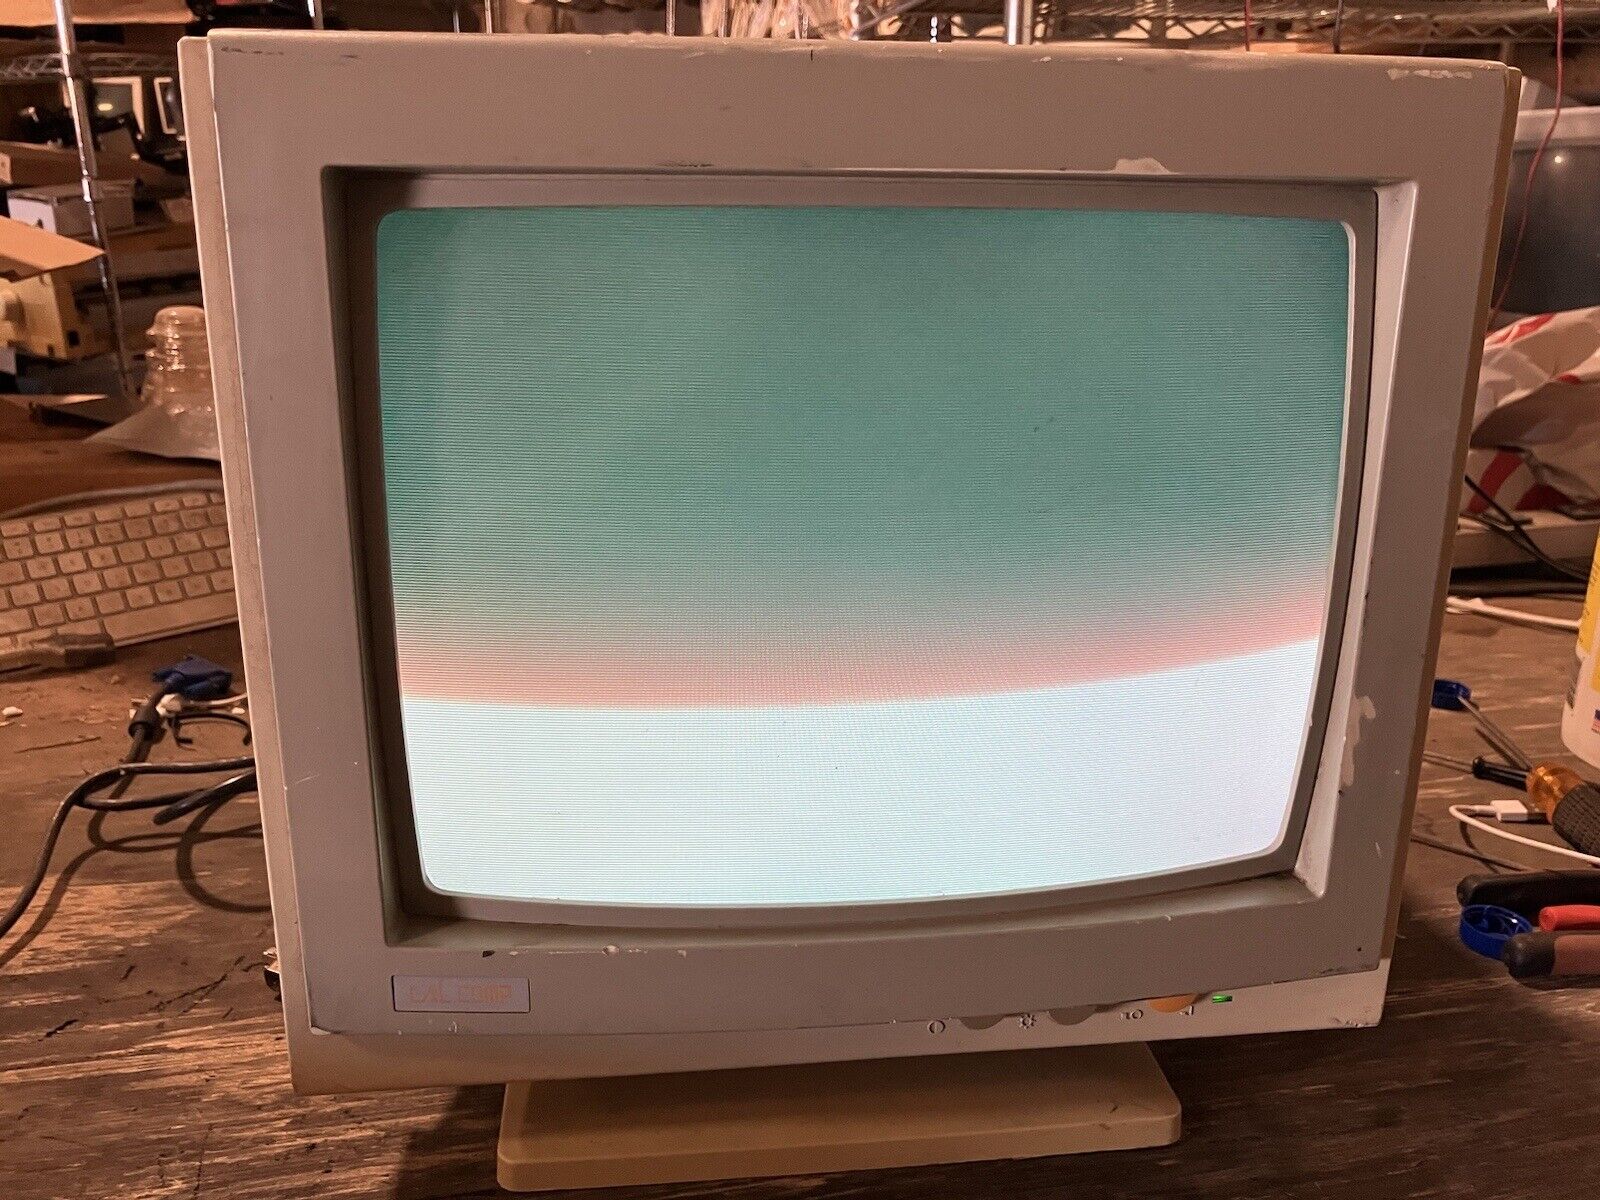 Vintage Cal.Comp 13” Monitor Model No 66250 